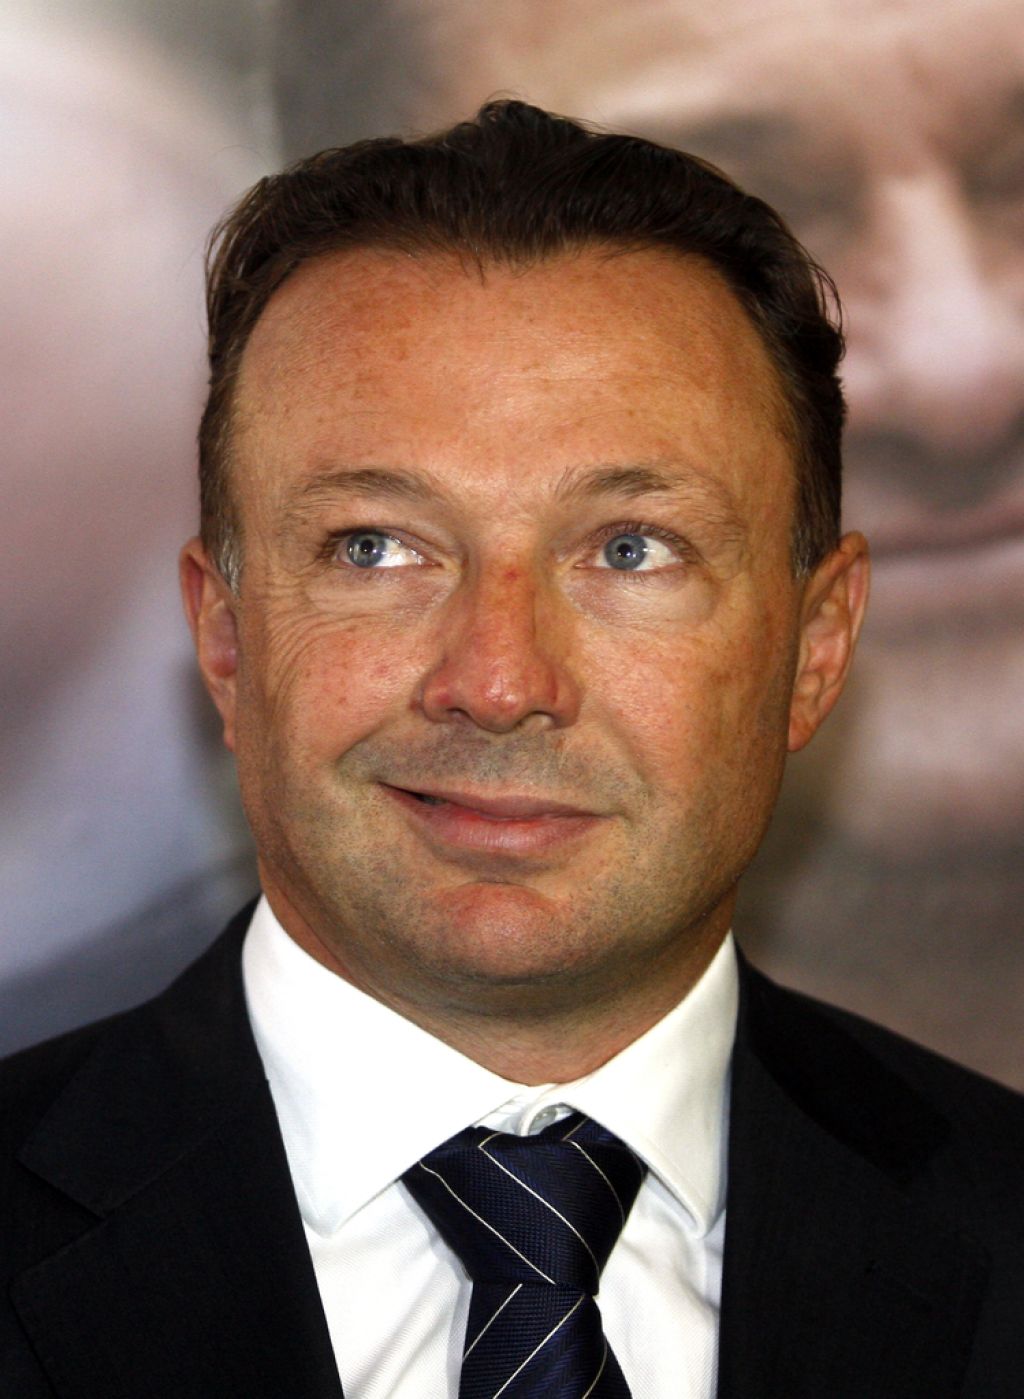 Volitve 2011: Janković bo kandidiral za poslanca